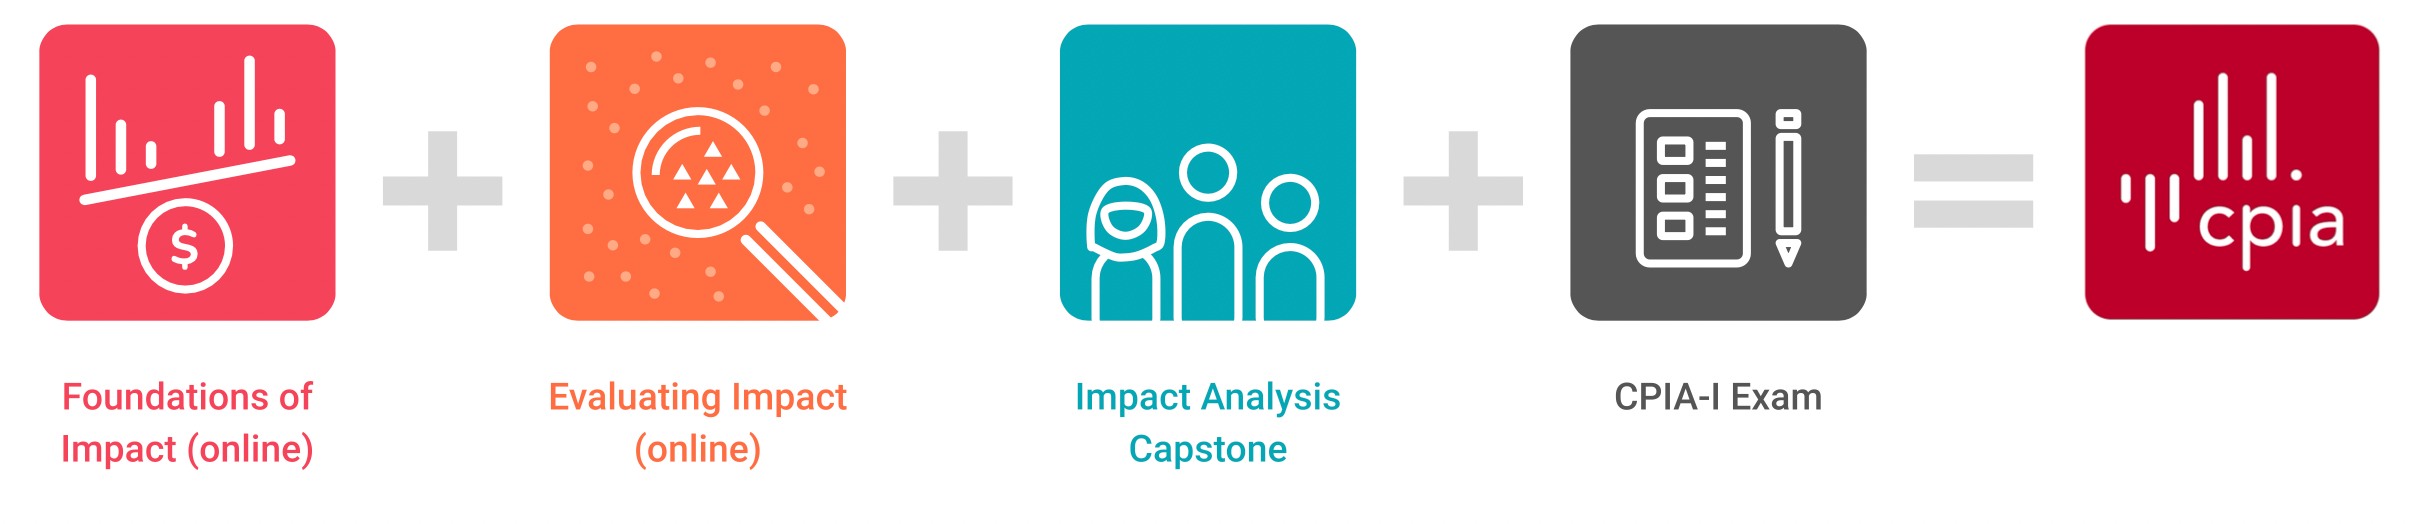 Foundations of Impact (online) + Evaluating Impact (online) + Impact Analysis Capstone + CPIA-I Exam = CPIA